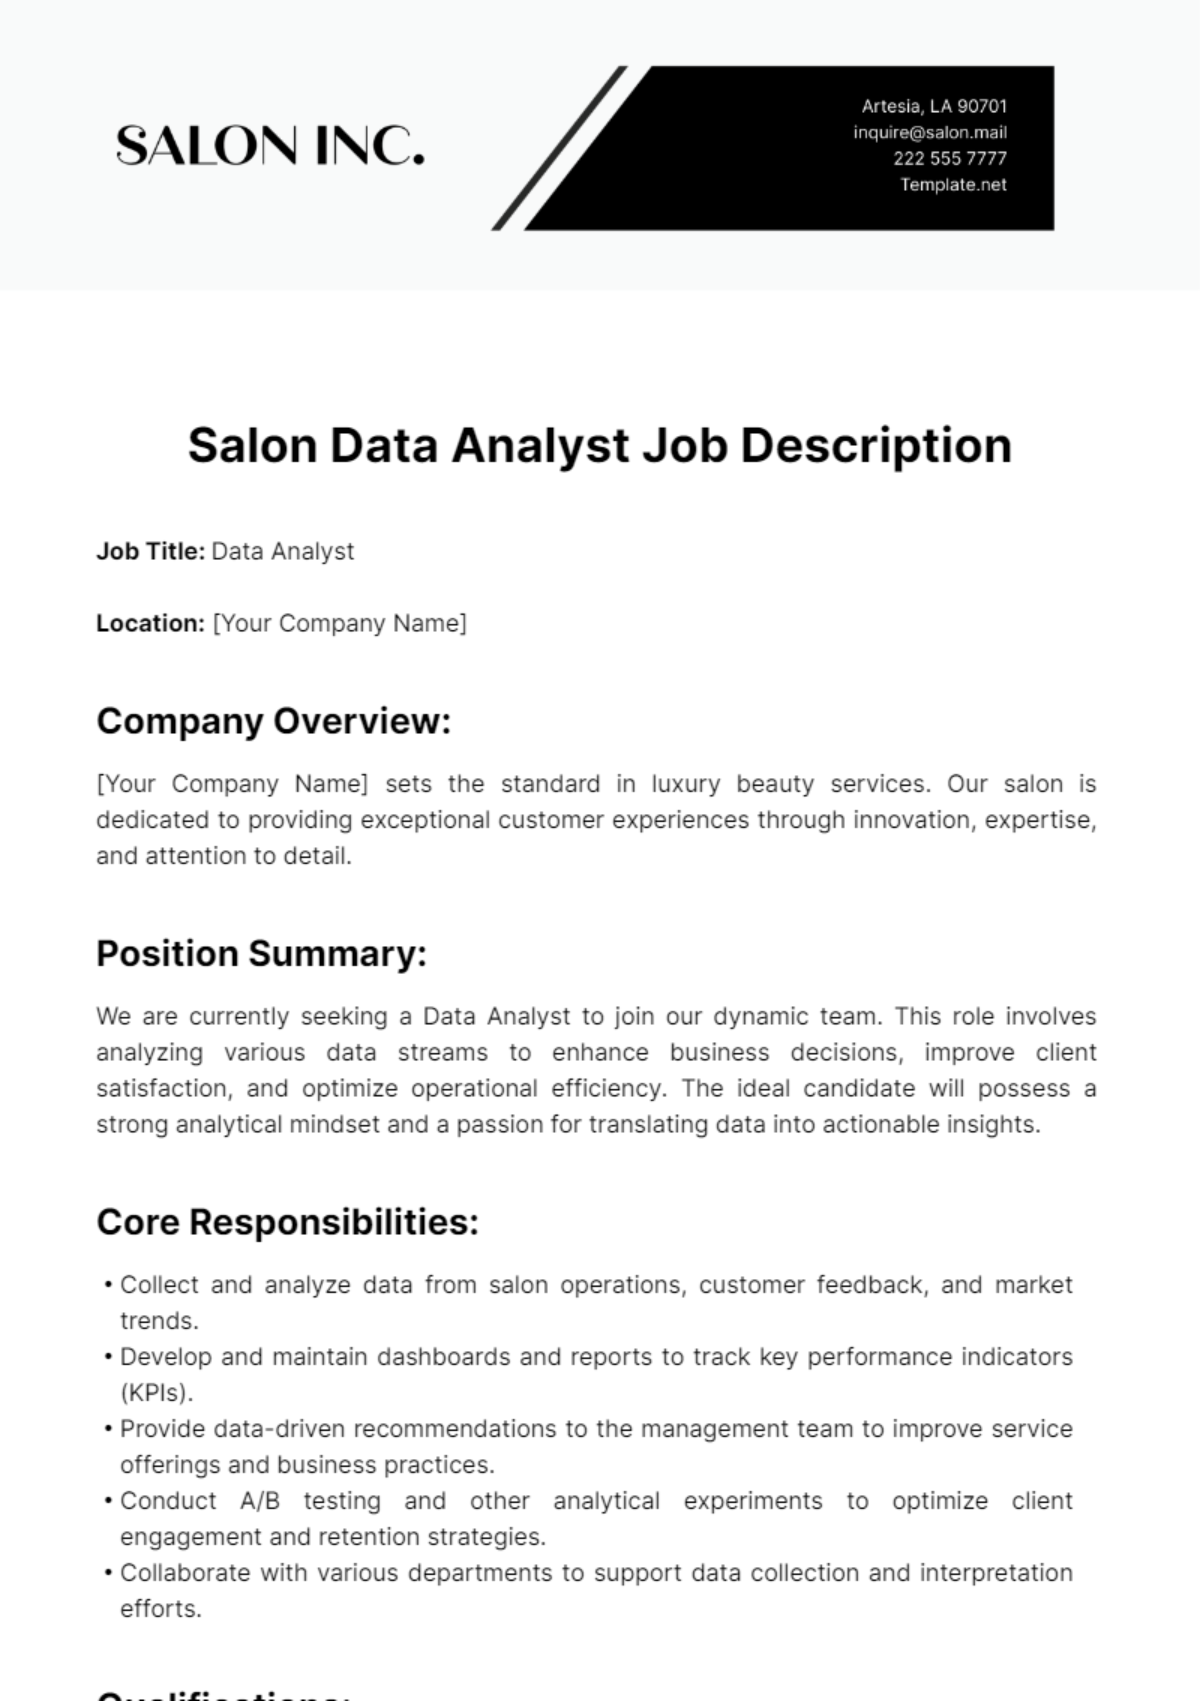 Salon Data Analyst Job Description Template